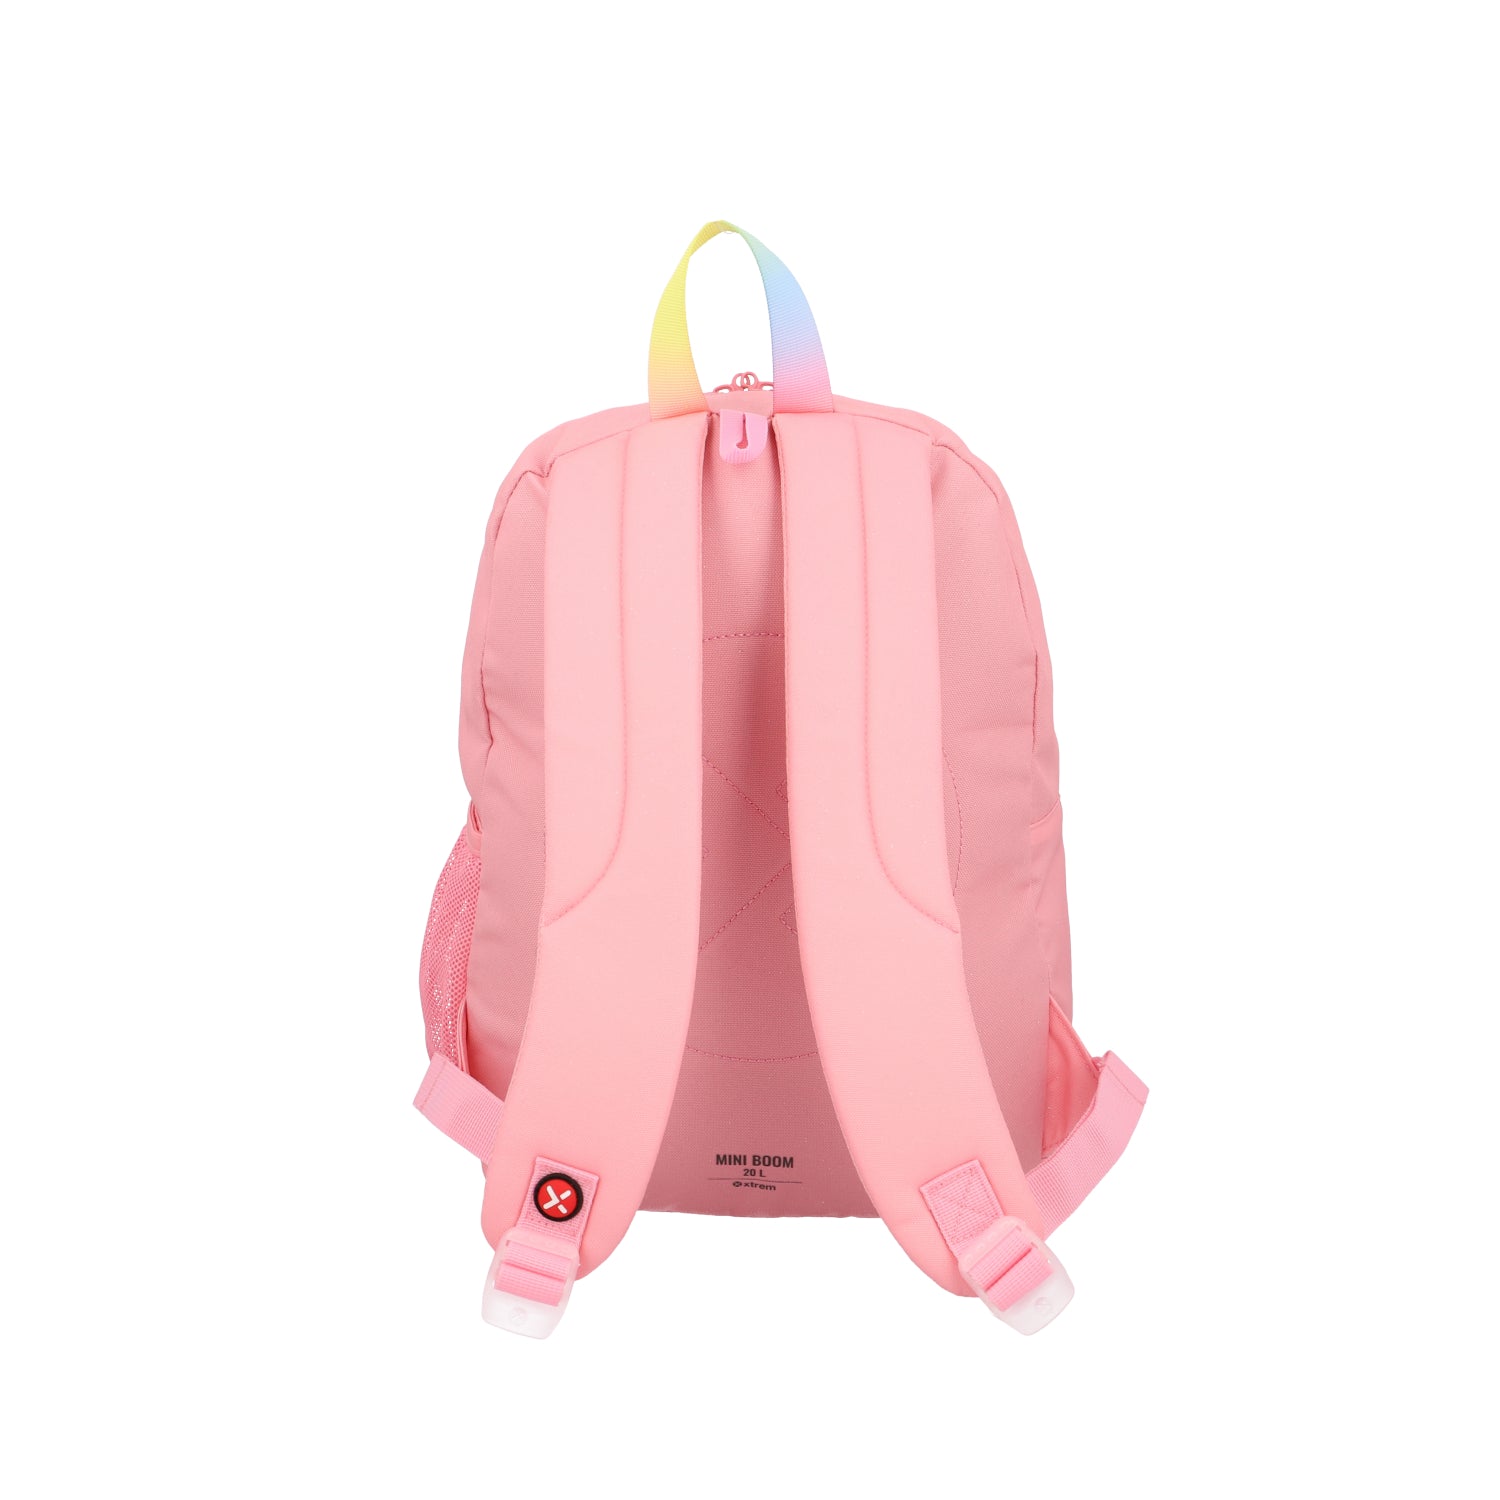 Mochila School Backpack Mini Boom 212 Pink Catic